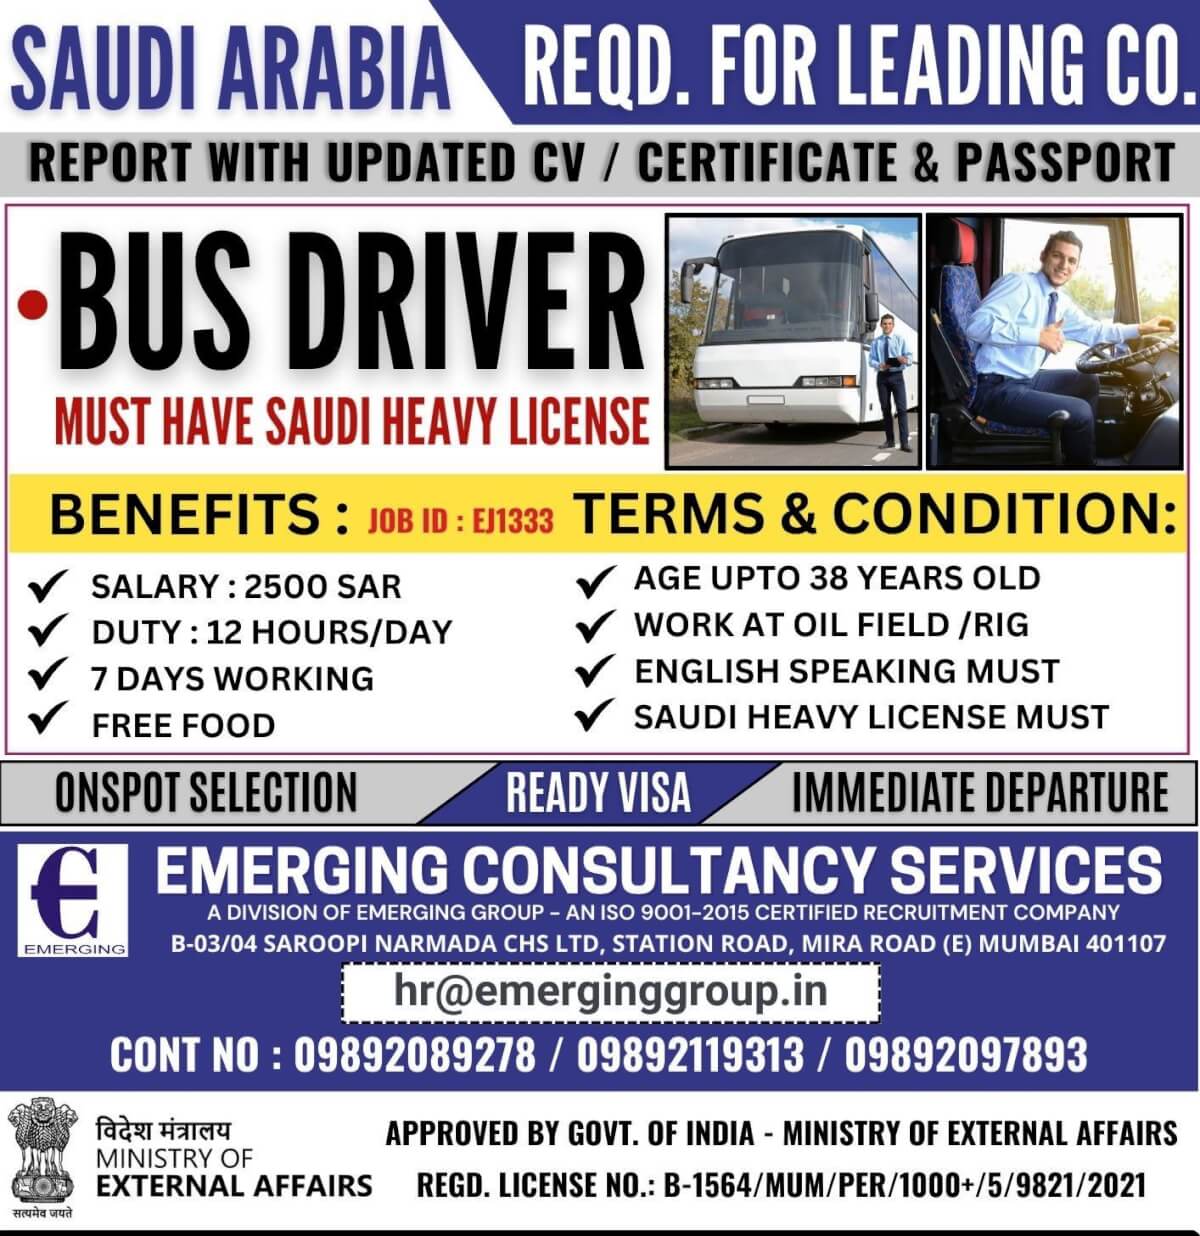 REQD. FOR LEADING COMPANY IN SAUDI ARABIA